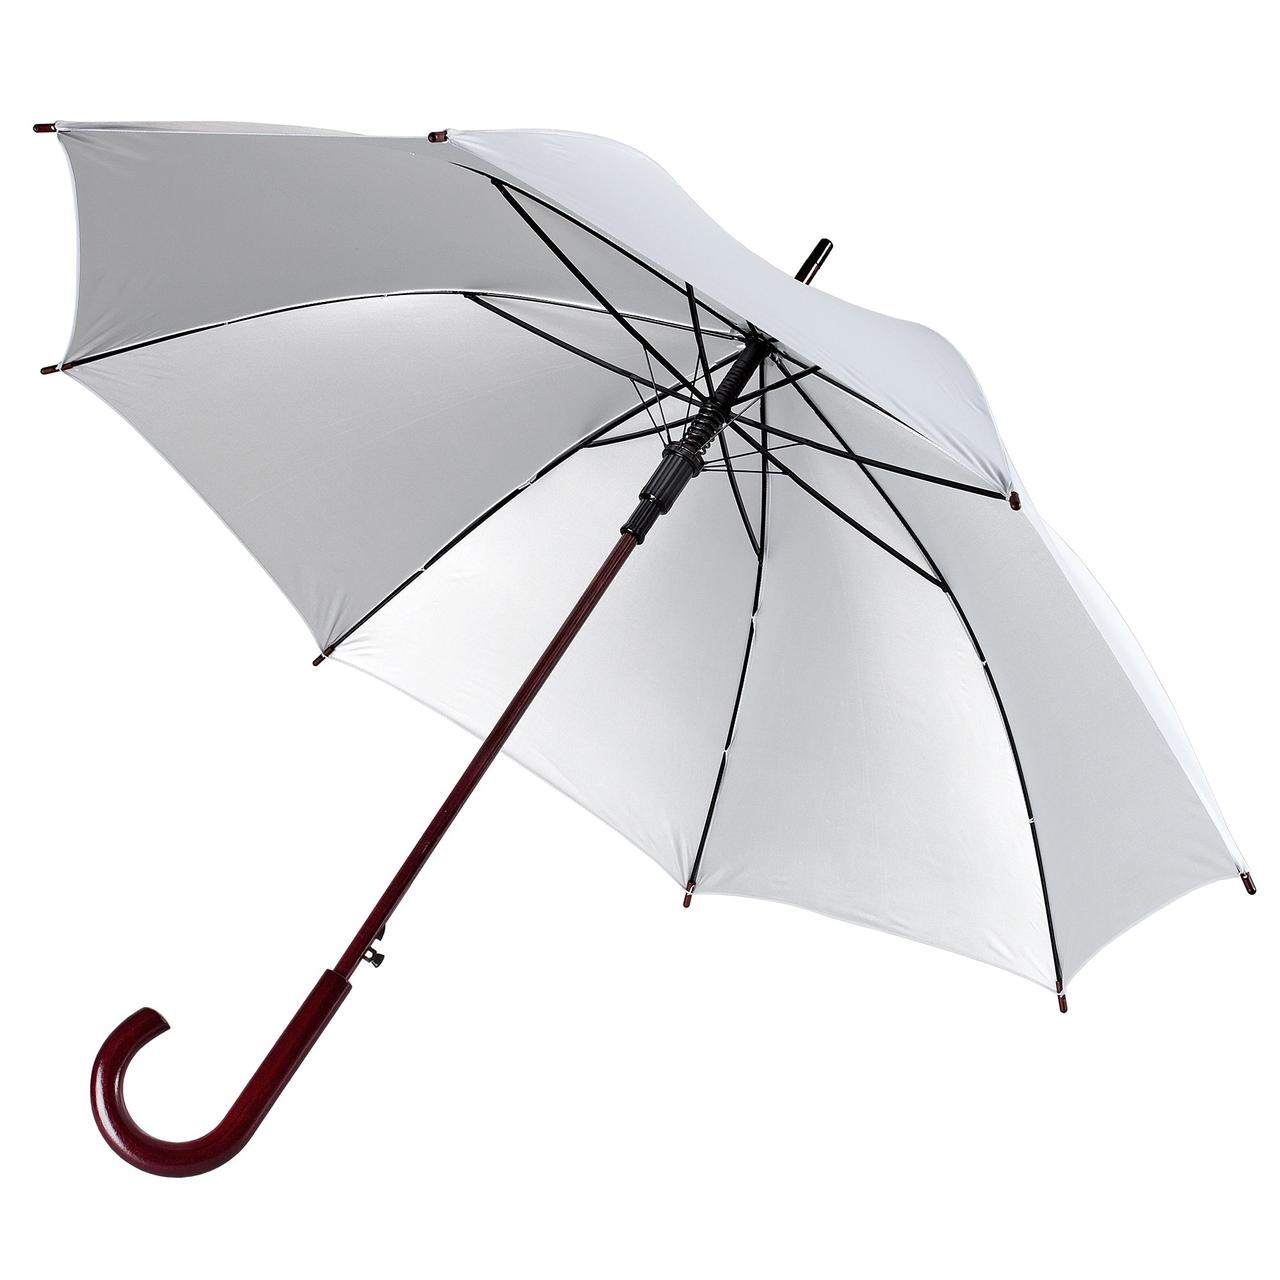 Зонт-трость Standard, серебристый (артикул 12393.01), фото 1